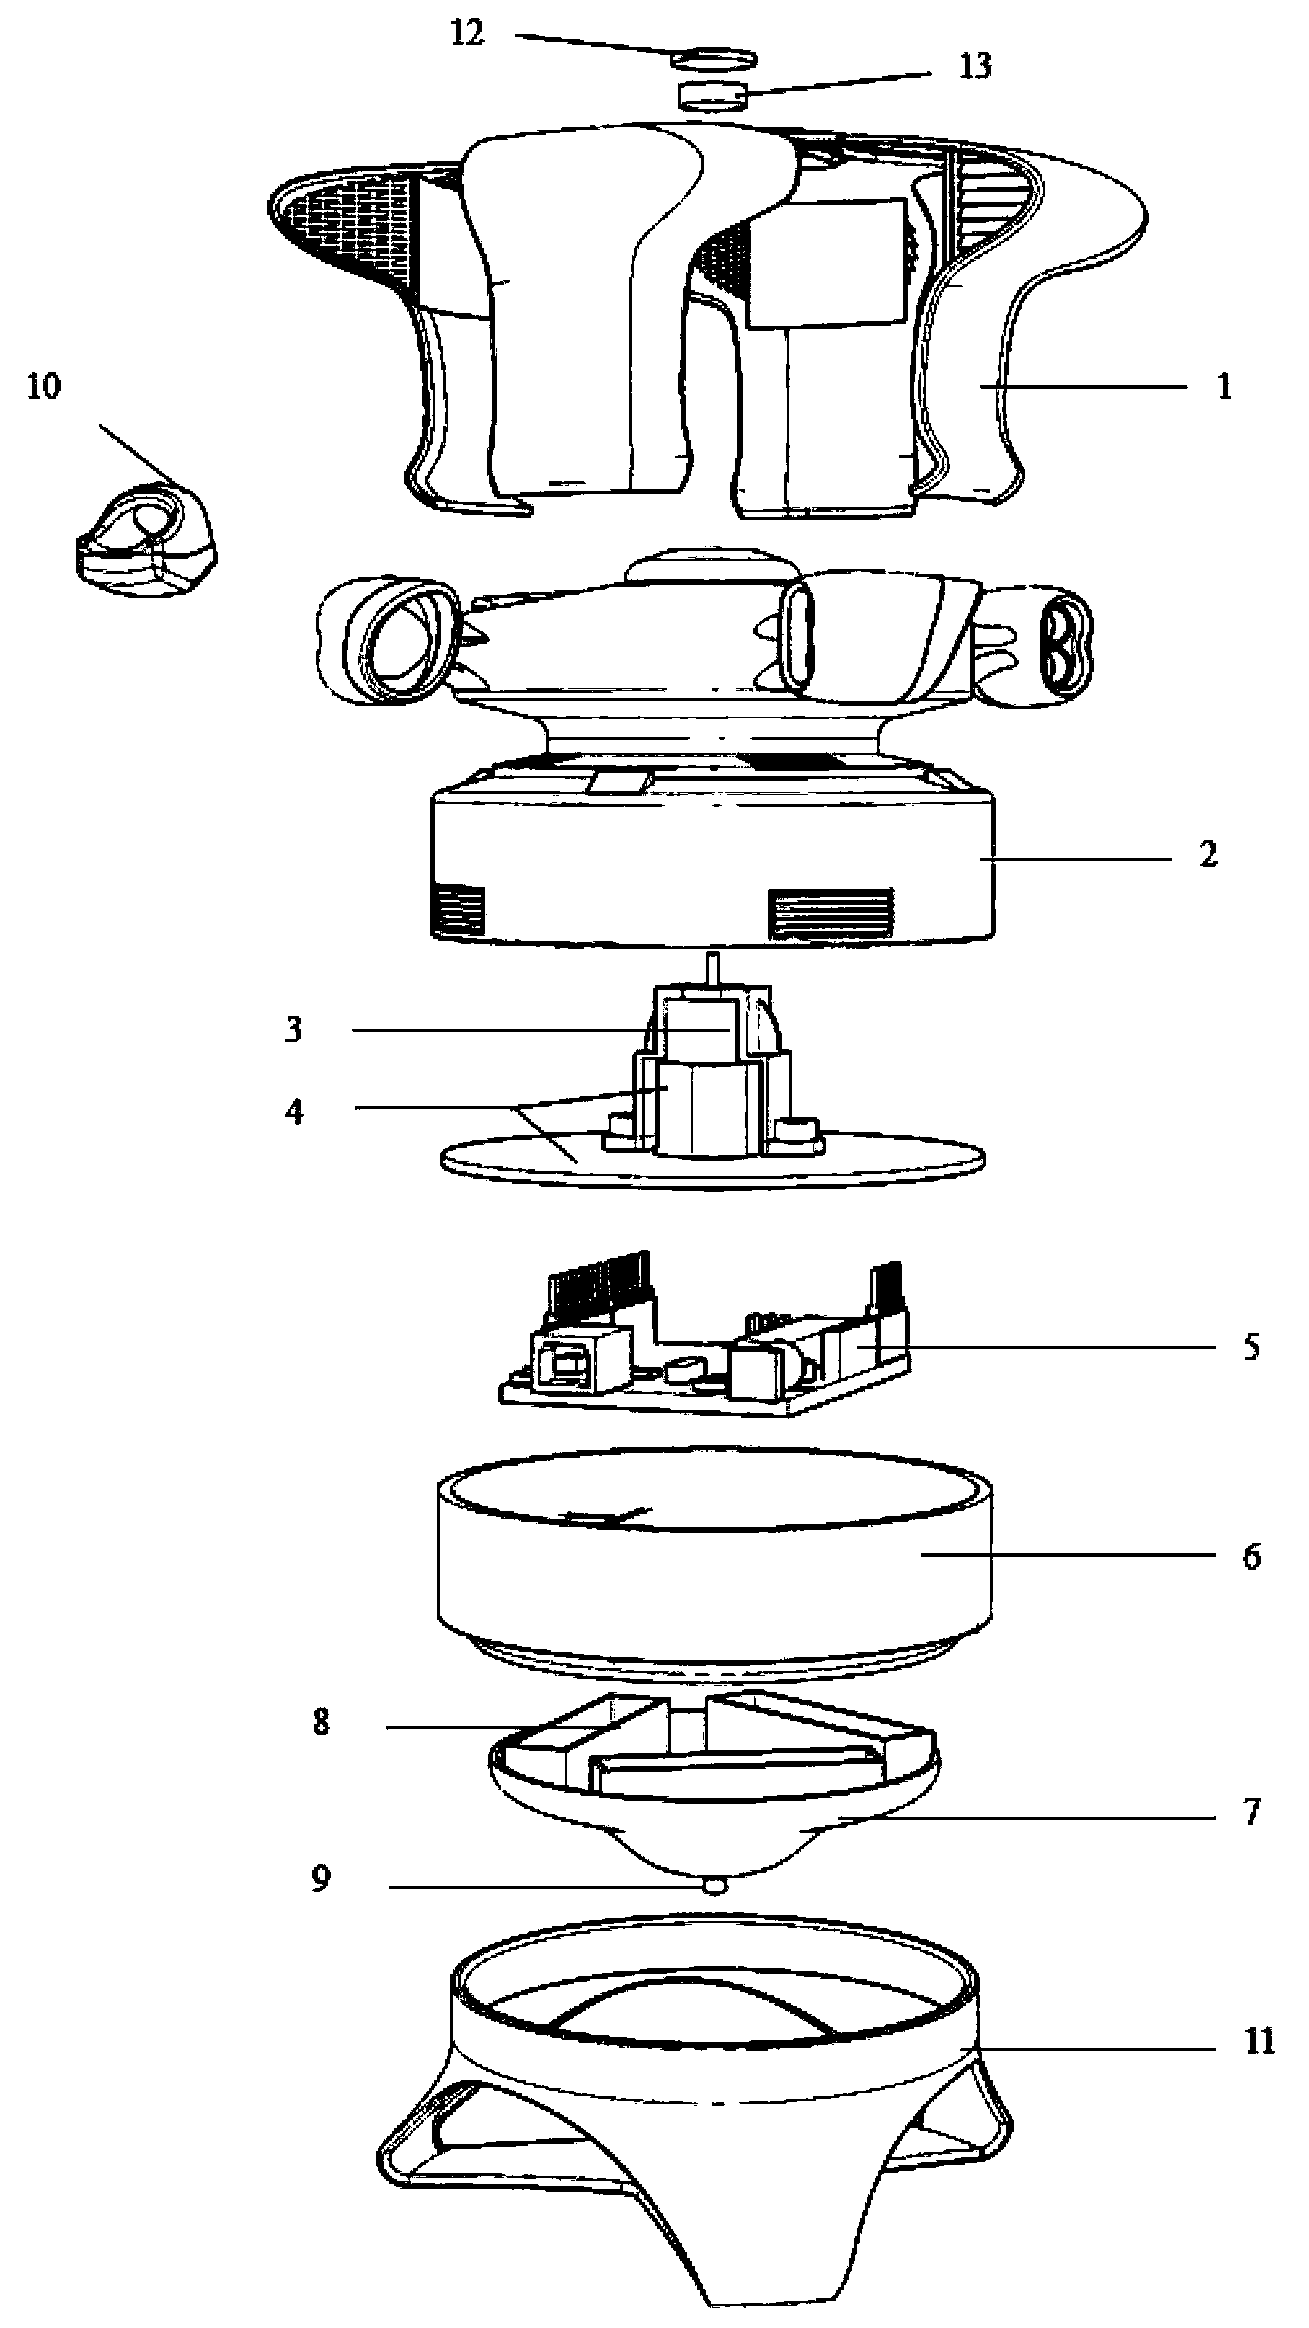 Ideo-motor gyroscope device